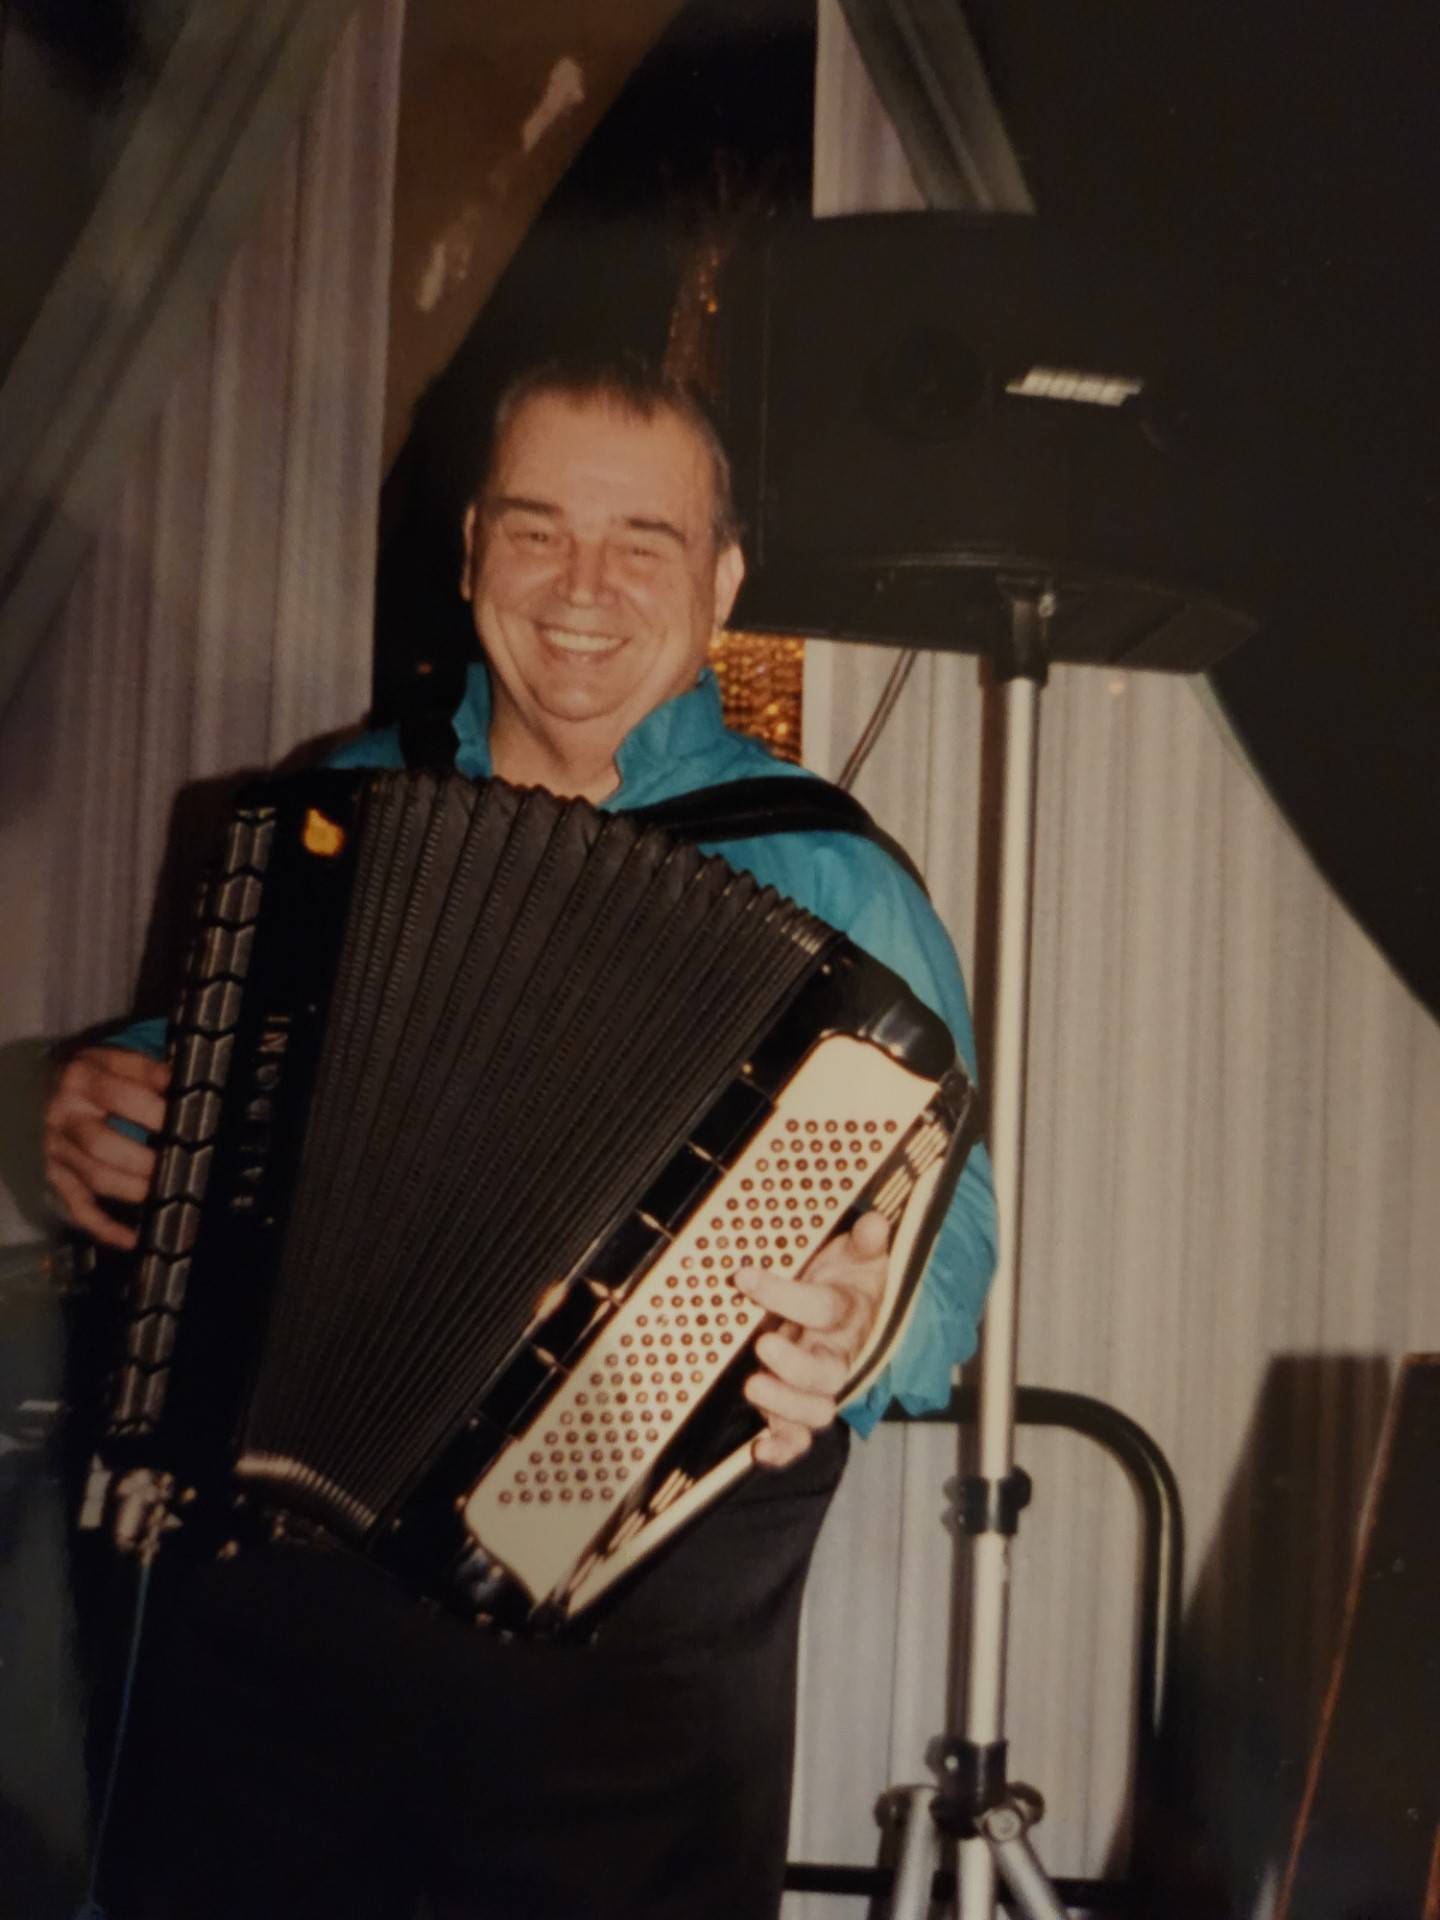 Bob Doszak performed so many festivals, weddings, dances, parades and church events, people dubbed him Joliet’s Polka King,